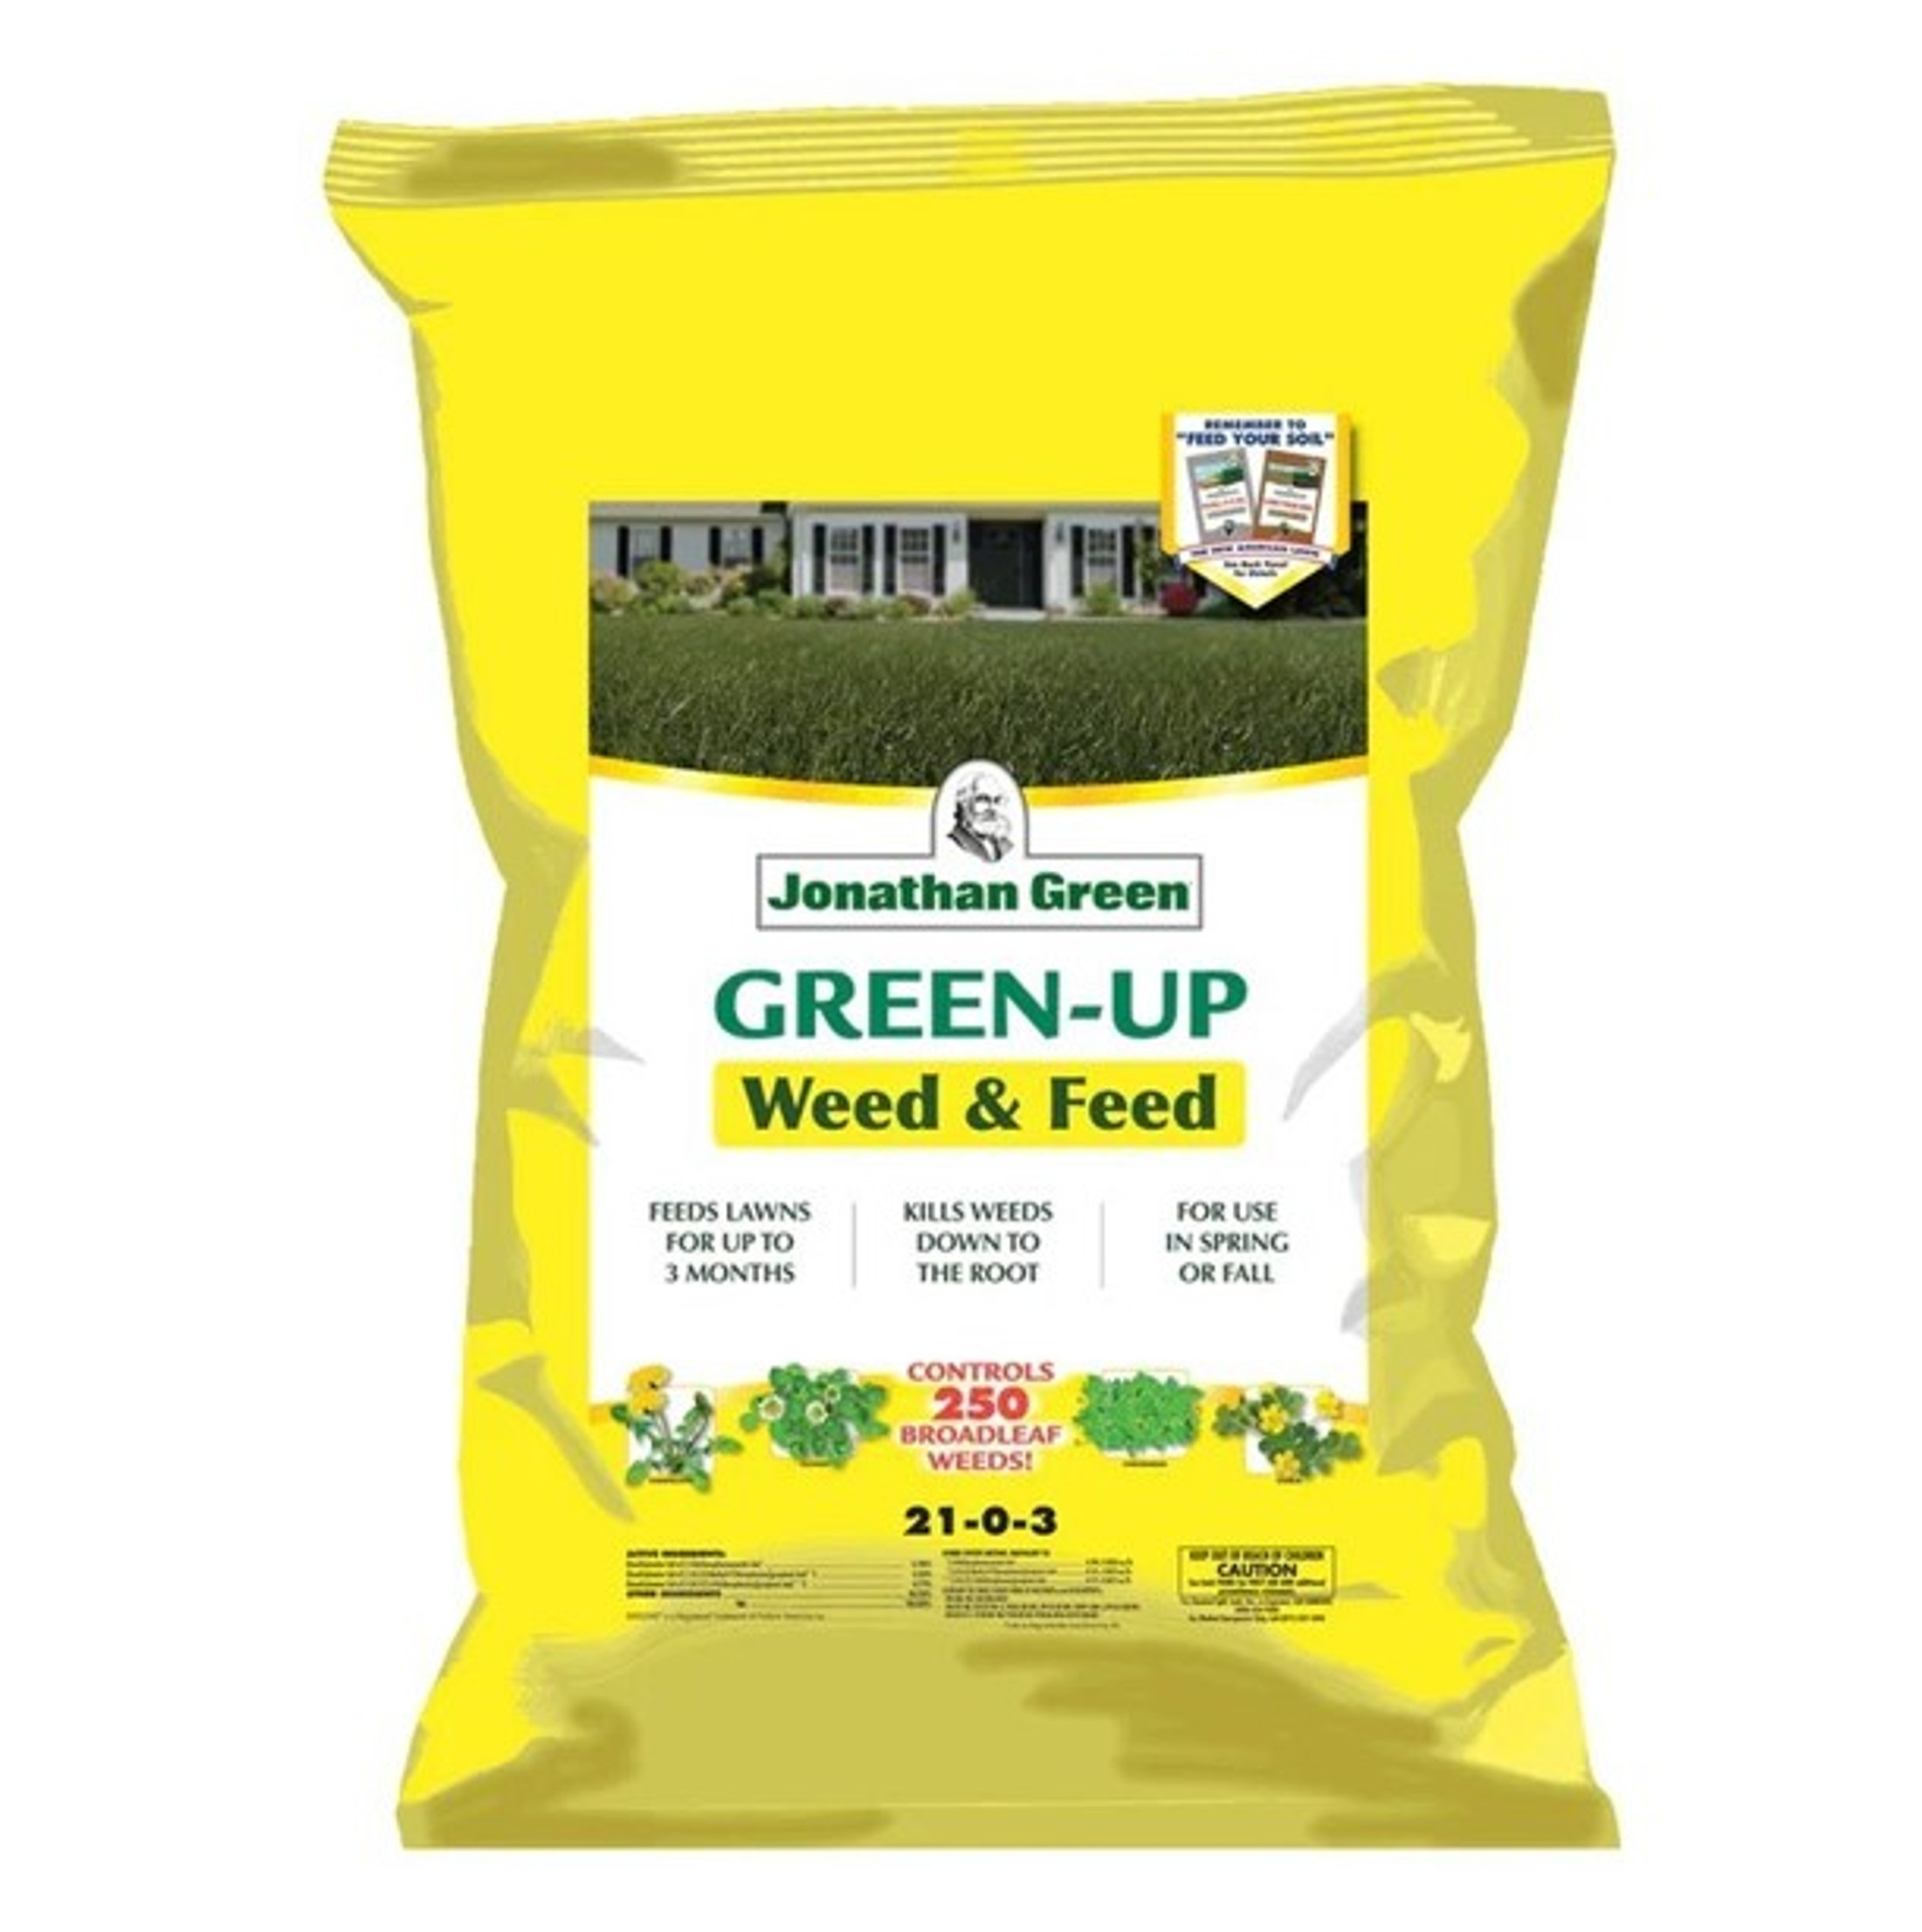 Jonathan Green GREEN-UP Weed & Feed Lawn Fertilizer